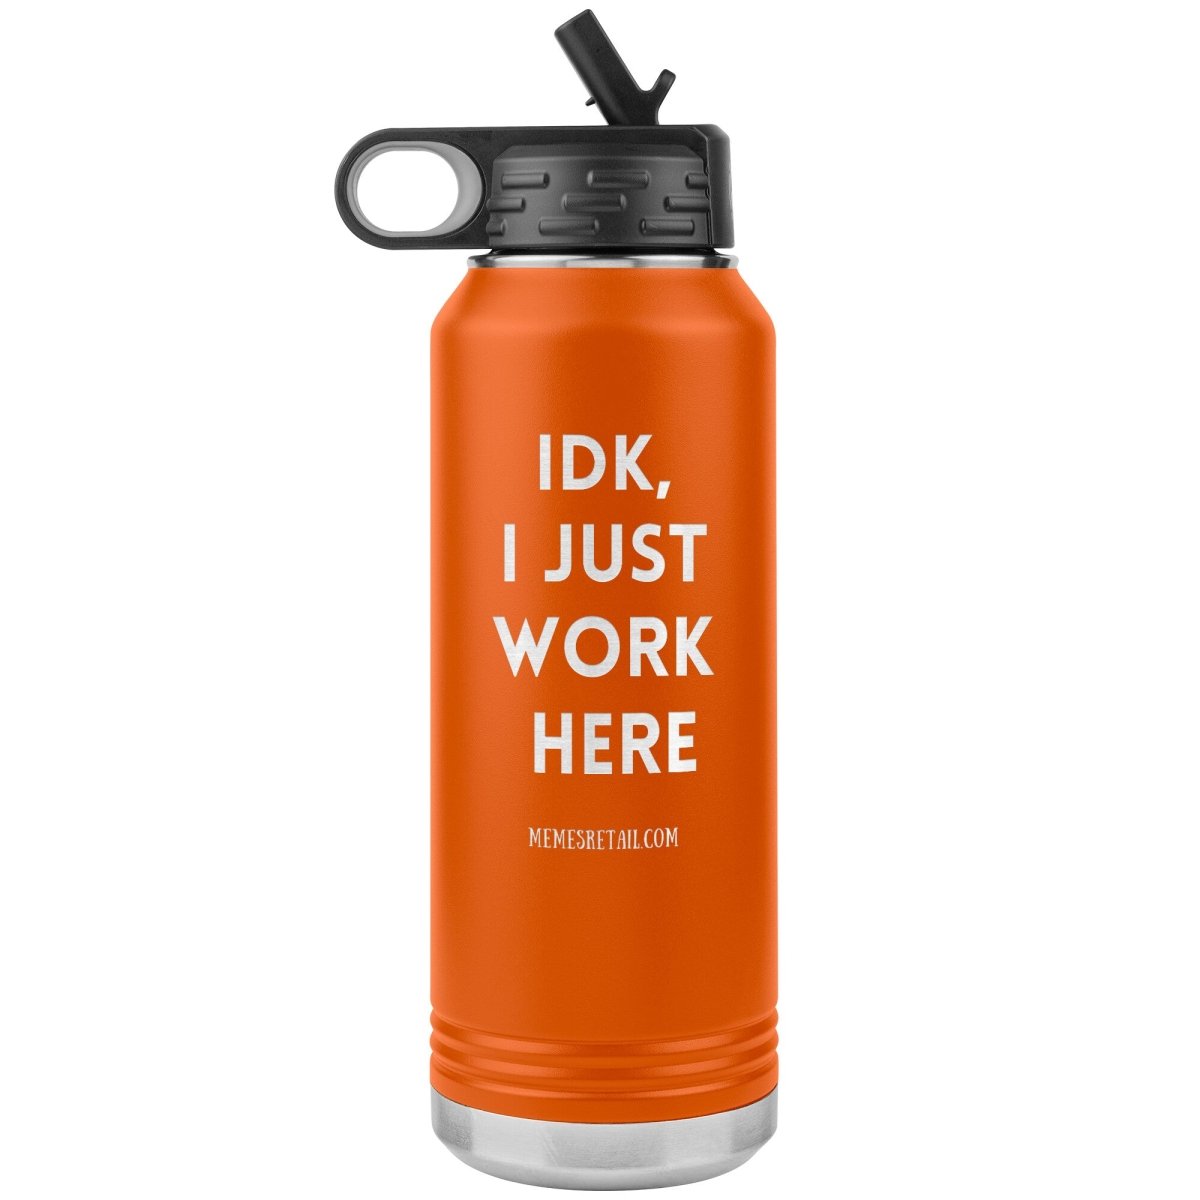 IDK, I Just Work Here 32 oz Stainless Steel Water Bottle Tumbler, Orange - MemesRetail.com